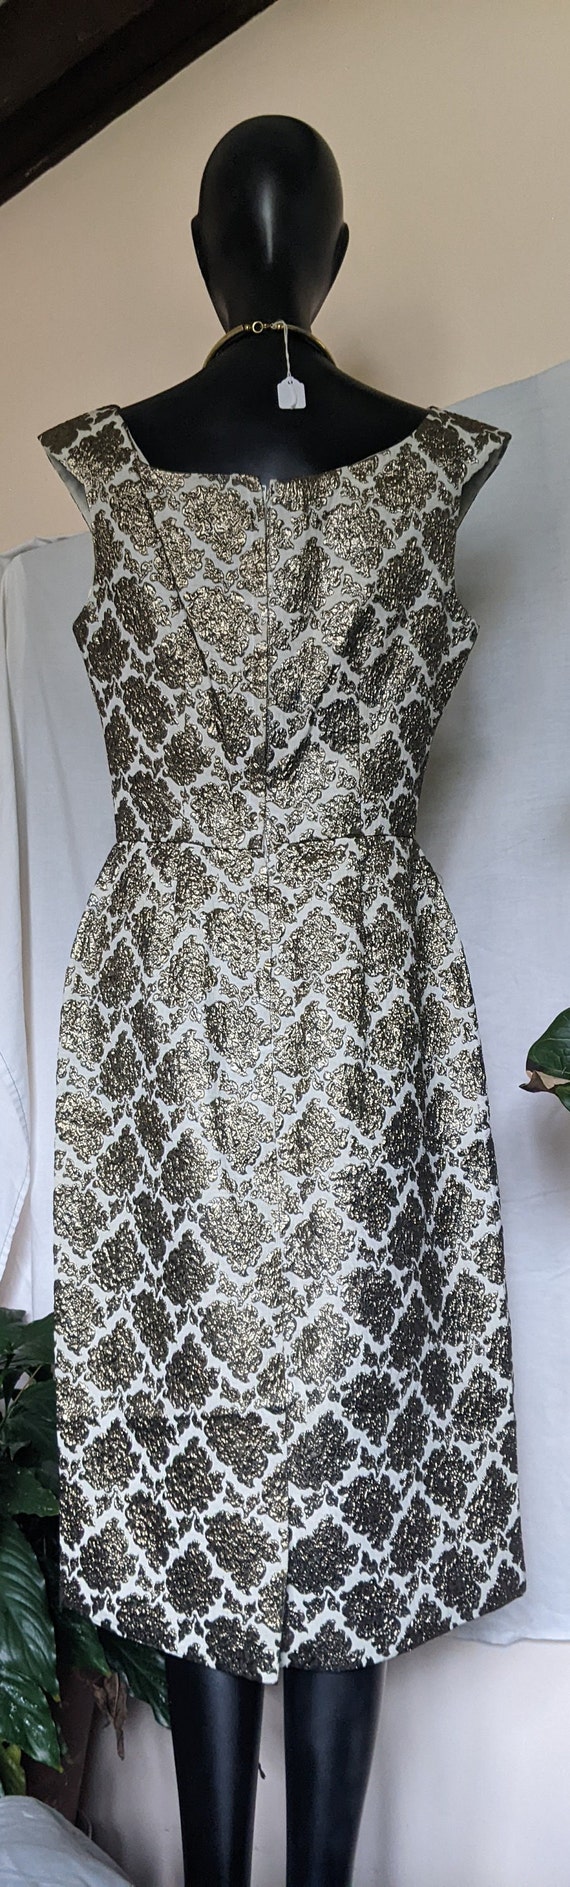 Mod Brocade Evening Dress, Size 11, Bronze Brocad… - image 5